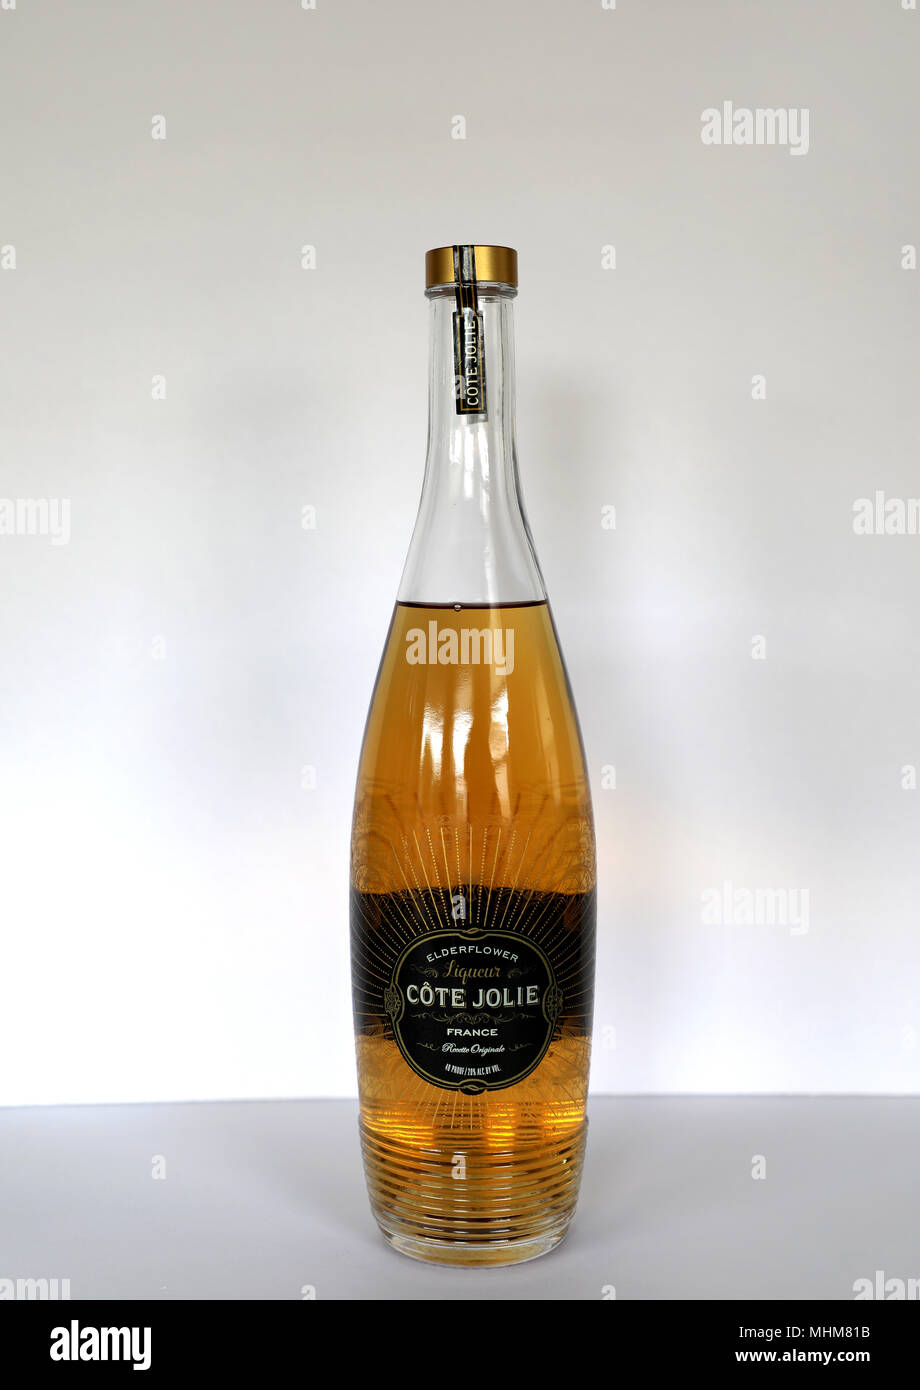 Cote Jolie Elderflower Liqueur Product Of France 20% Alcohol Bottle on White Background Stock Photo